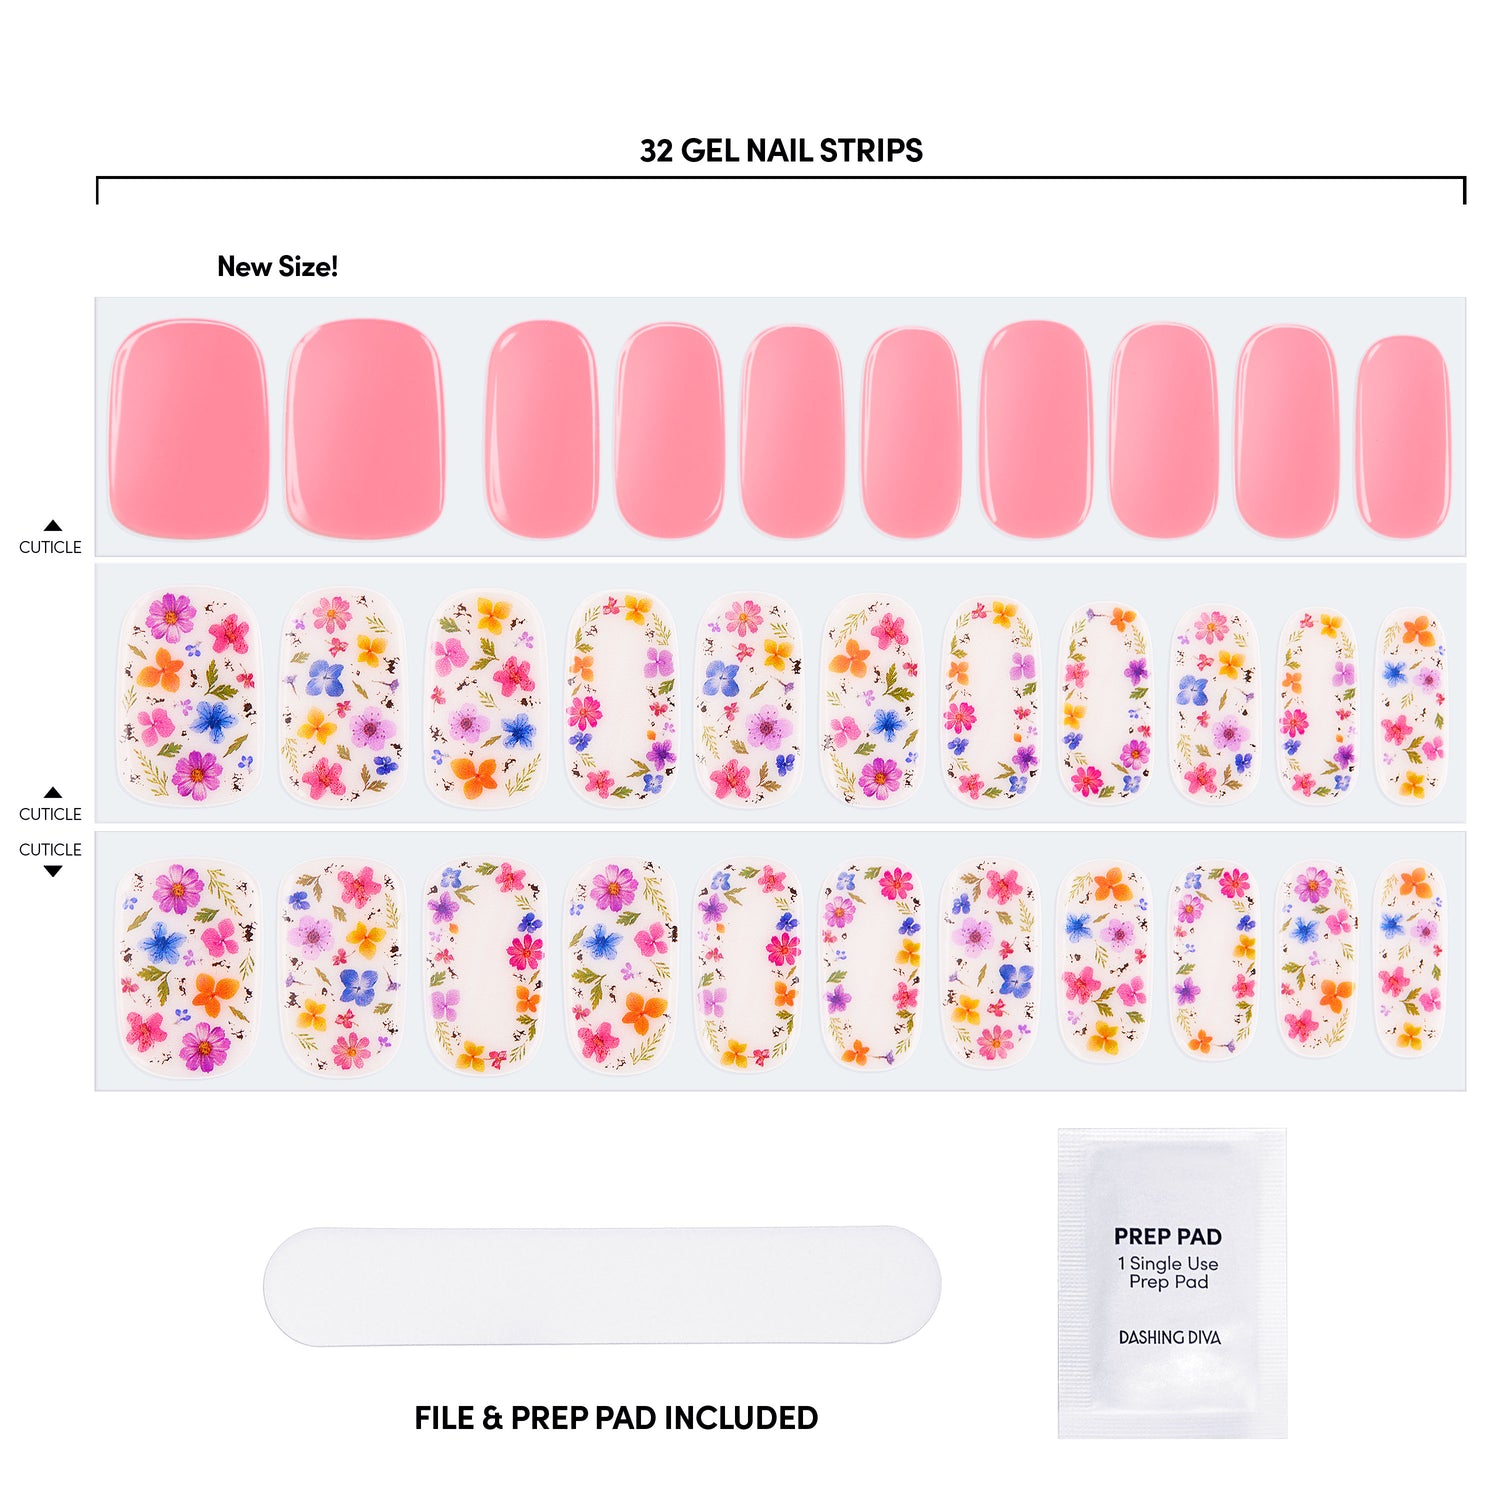  Peachy pink gel nail strips featuring vintage floral